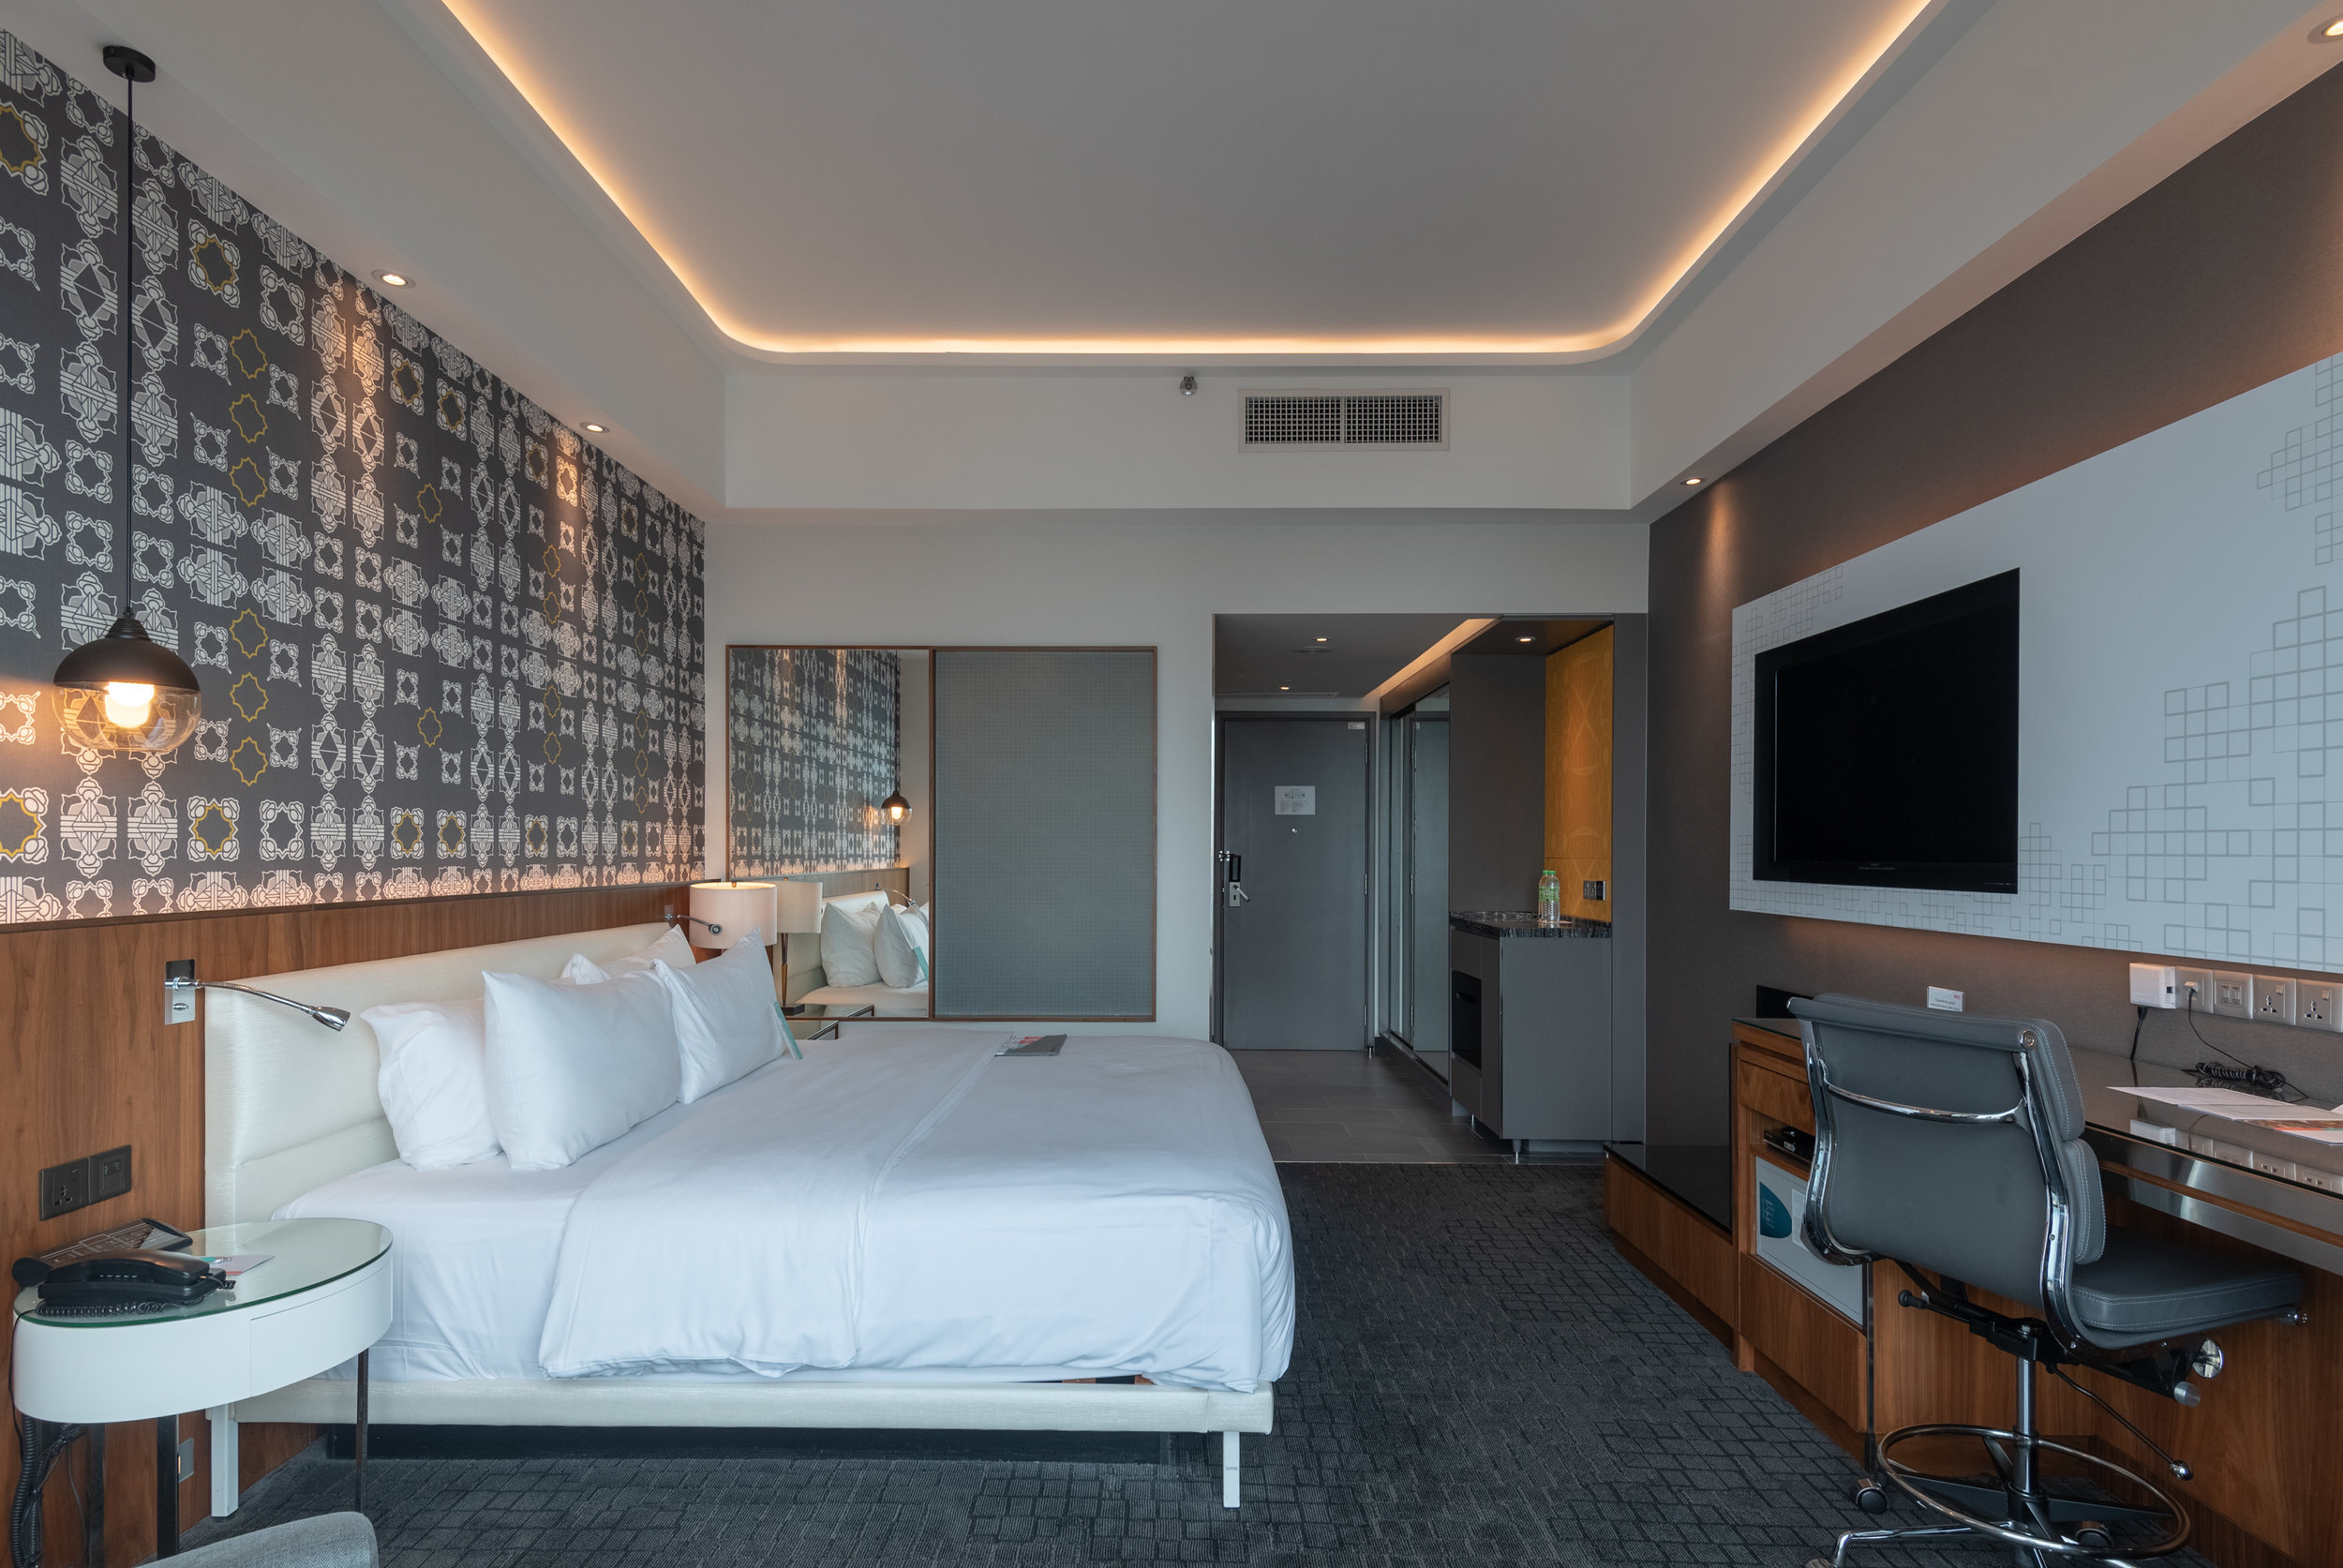 Hotel Review Le Meridien Kuala Lumpur (Le Meridien Club Room) Conveniently Located in KL